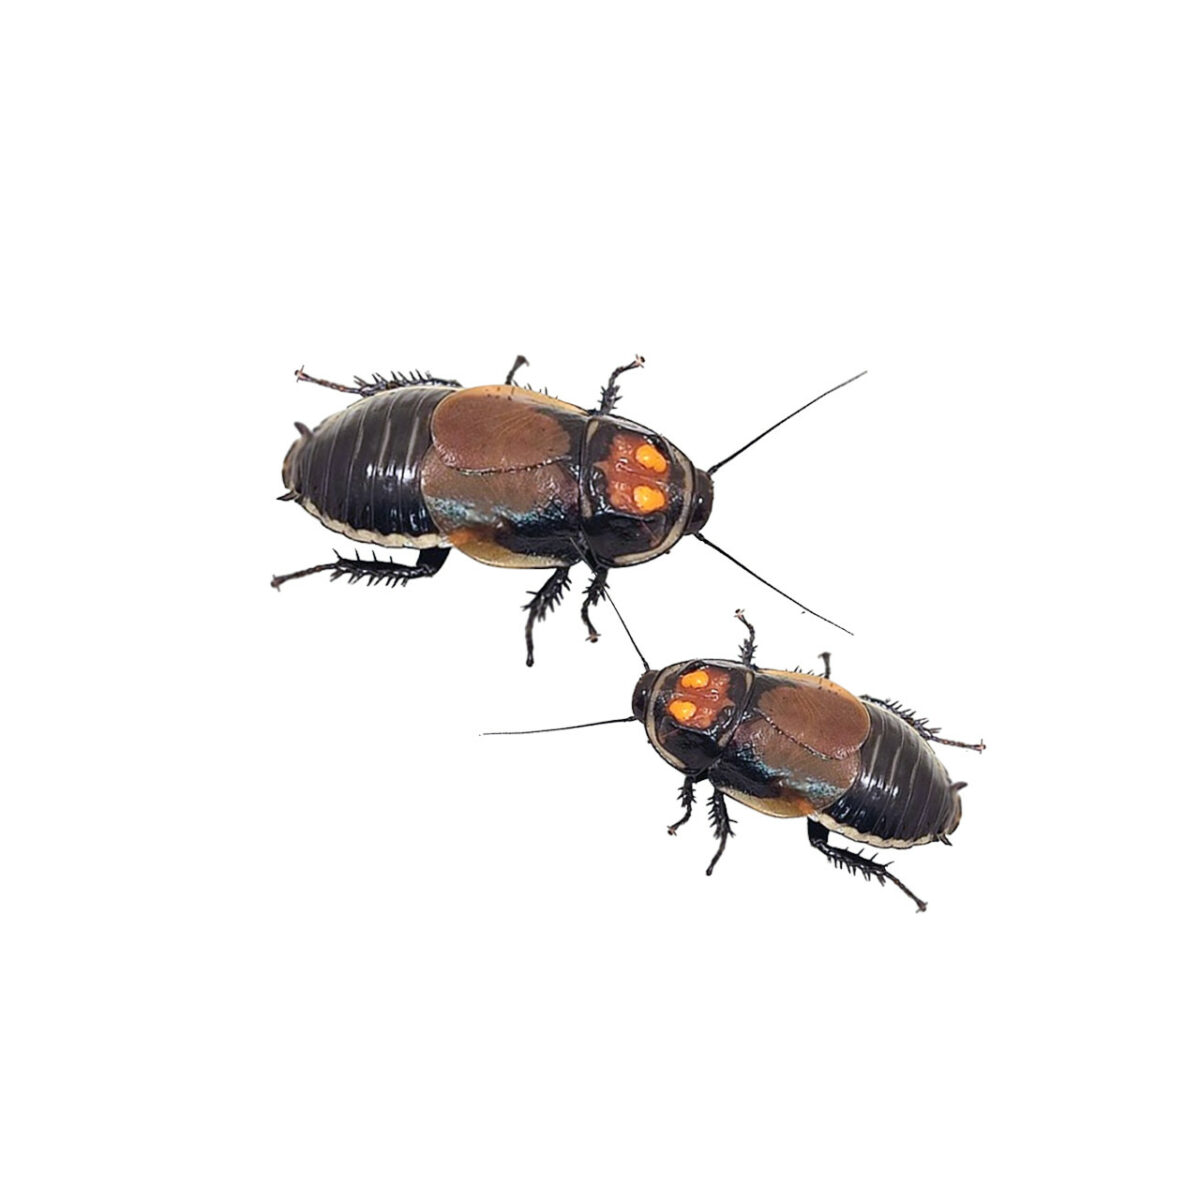 cockroach Lucihormetica verrucosa